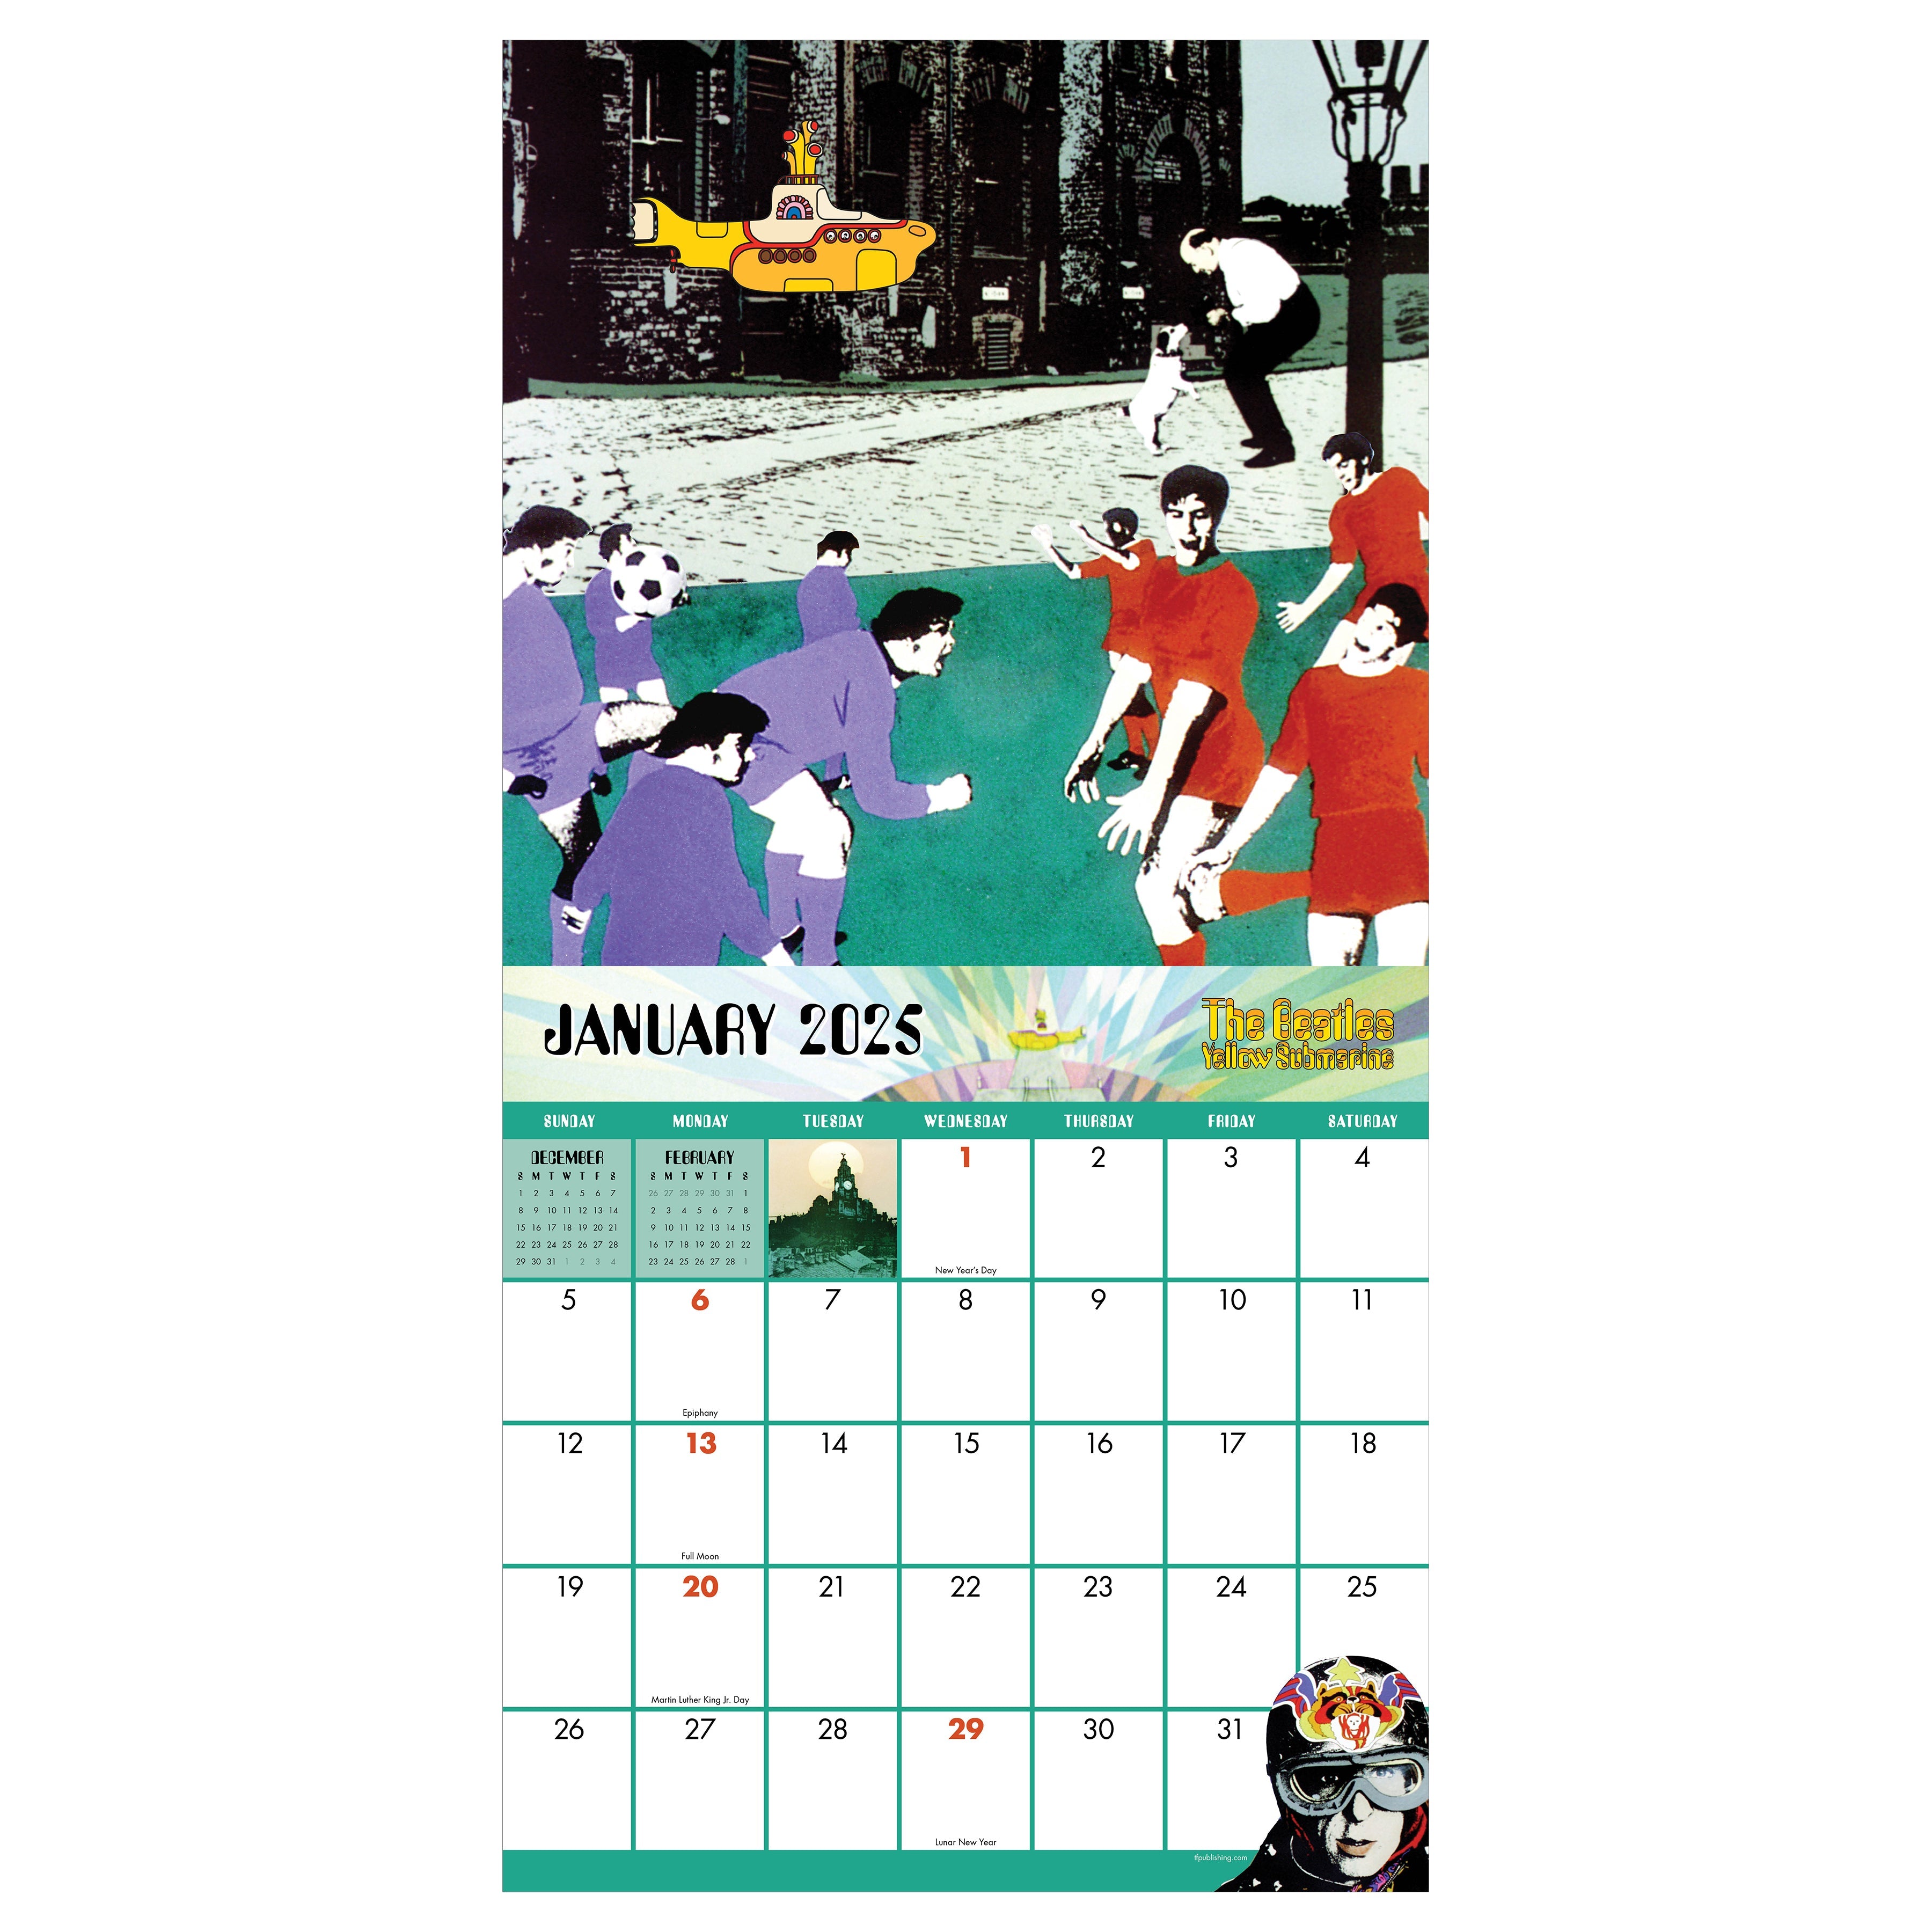 2025 The Beatles: Yellow Submarine - Square Wall Calendar